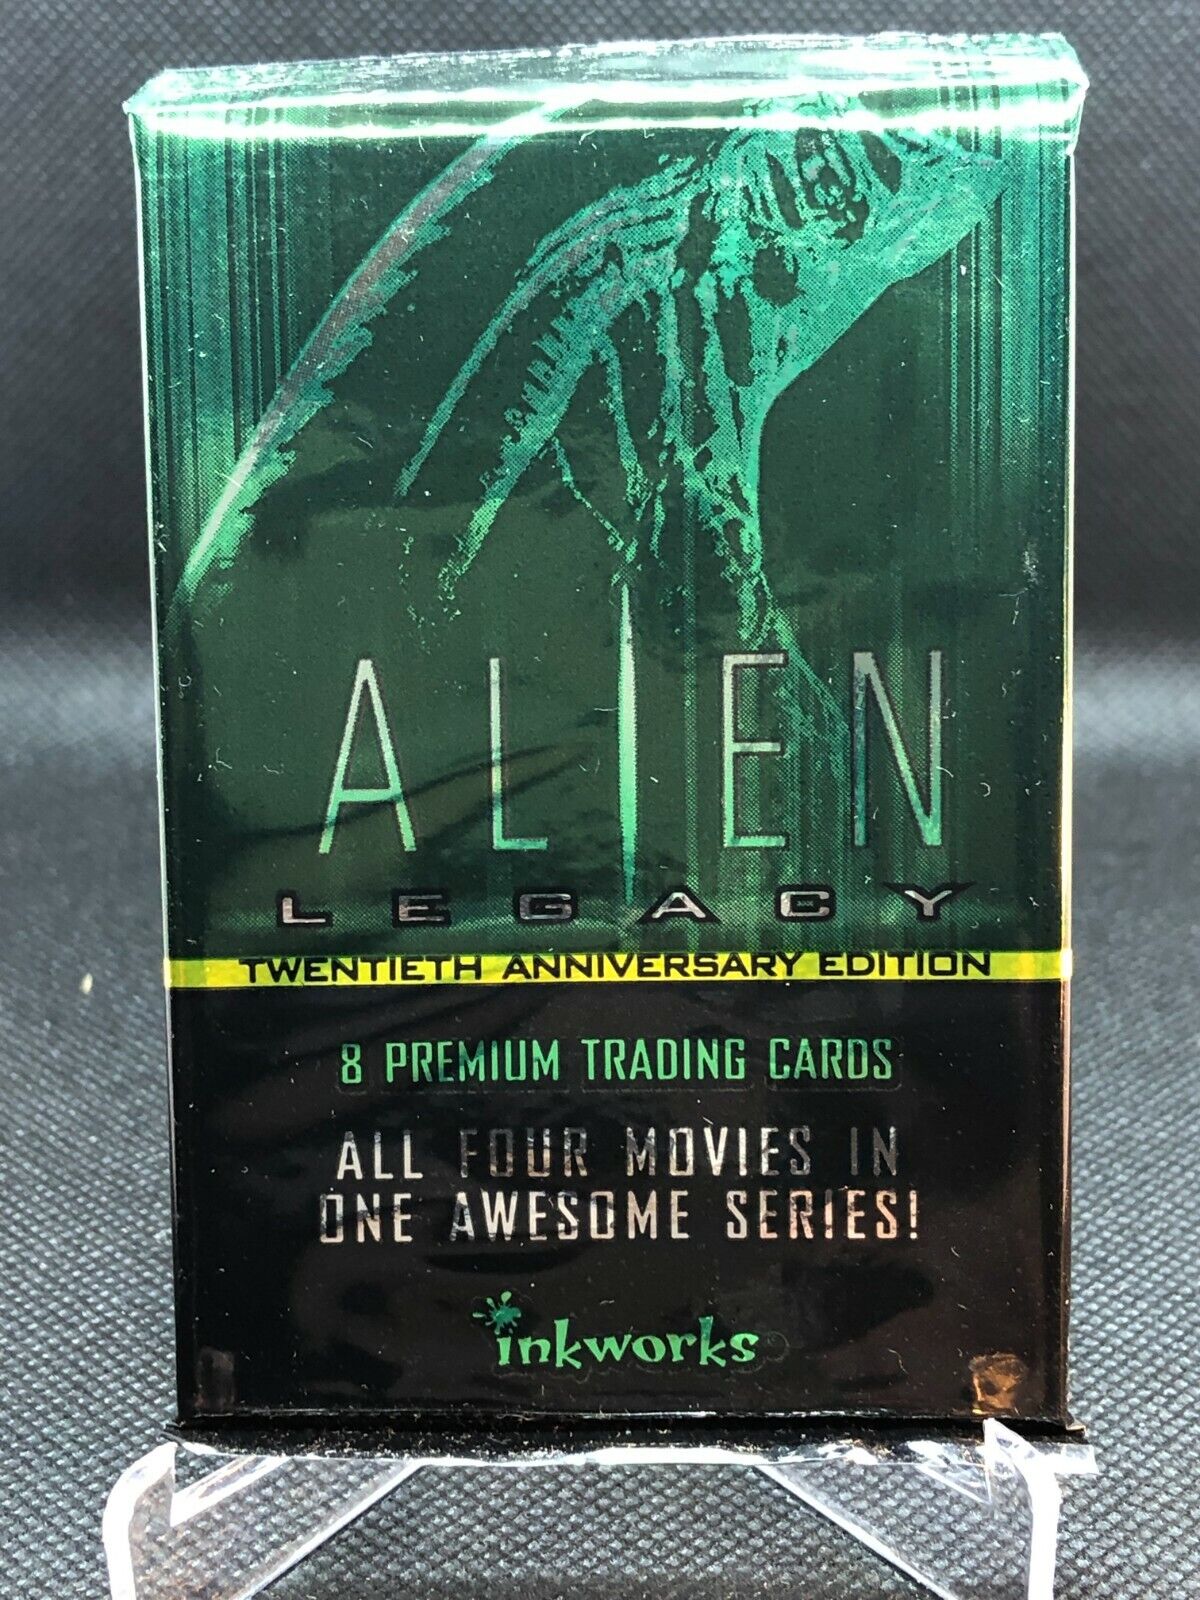 1998 Inkworks Alien Legacy Twentieth Anniversary Edition Trading Card Pack (1)